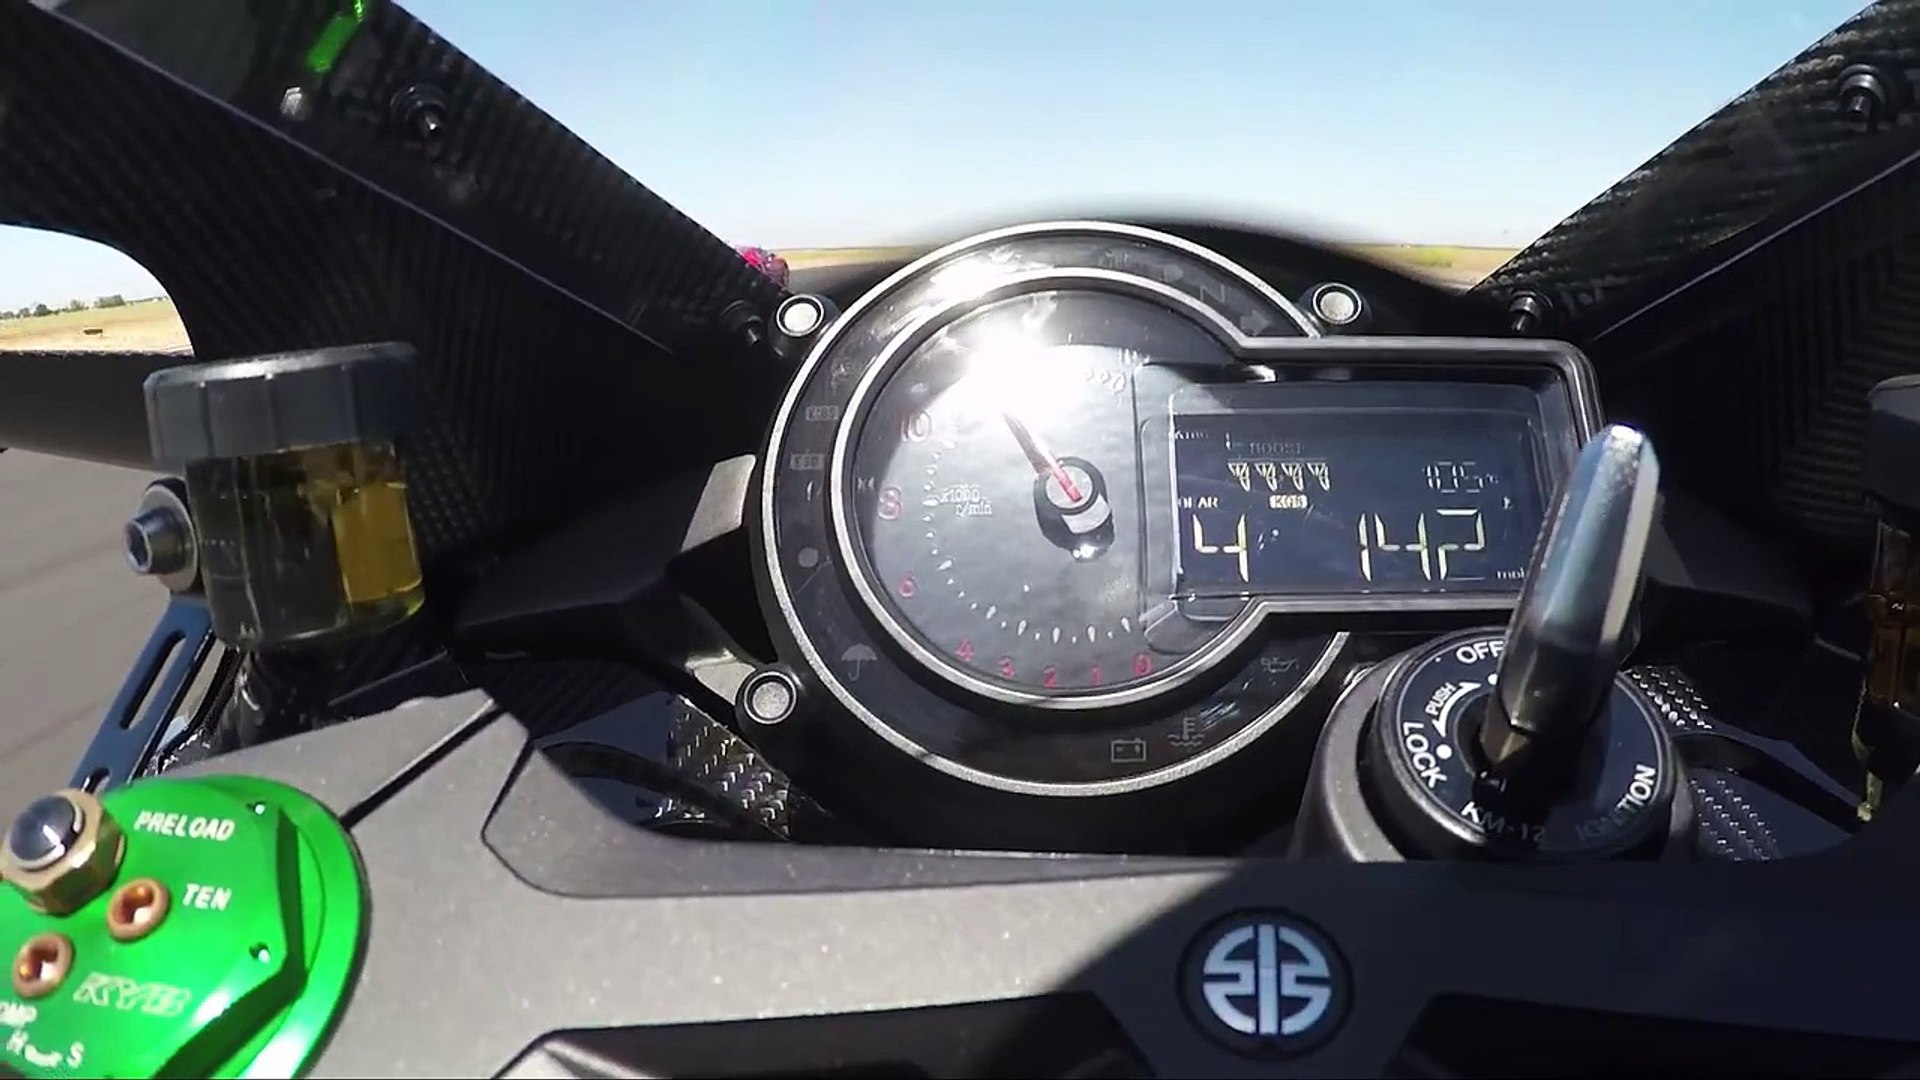 Kawasaki H2R vs Bugatti Veyron Supercar 1/2 Mile Airstrip Race 2 -  Dailymotion Video